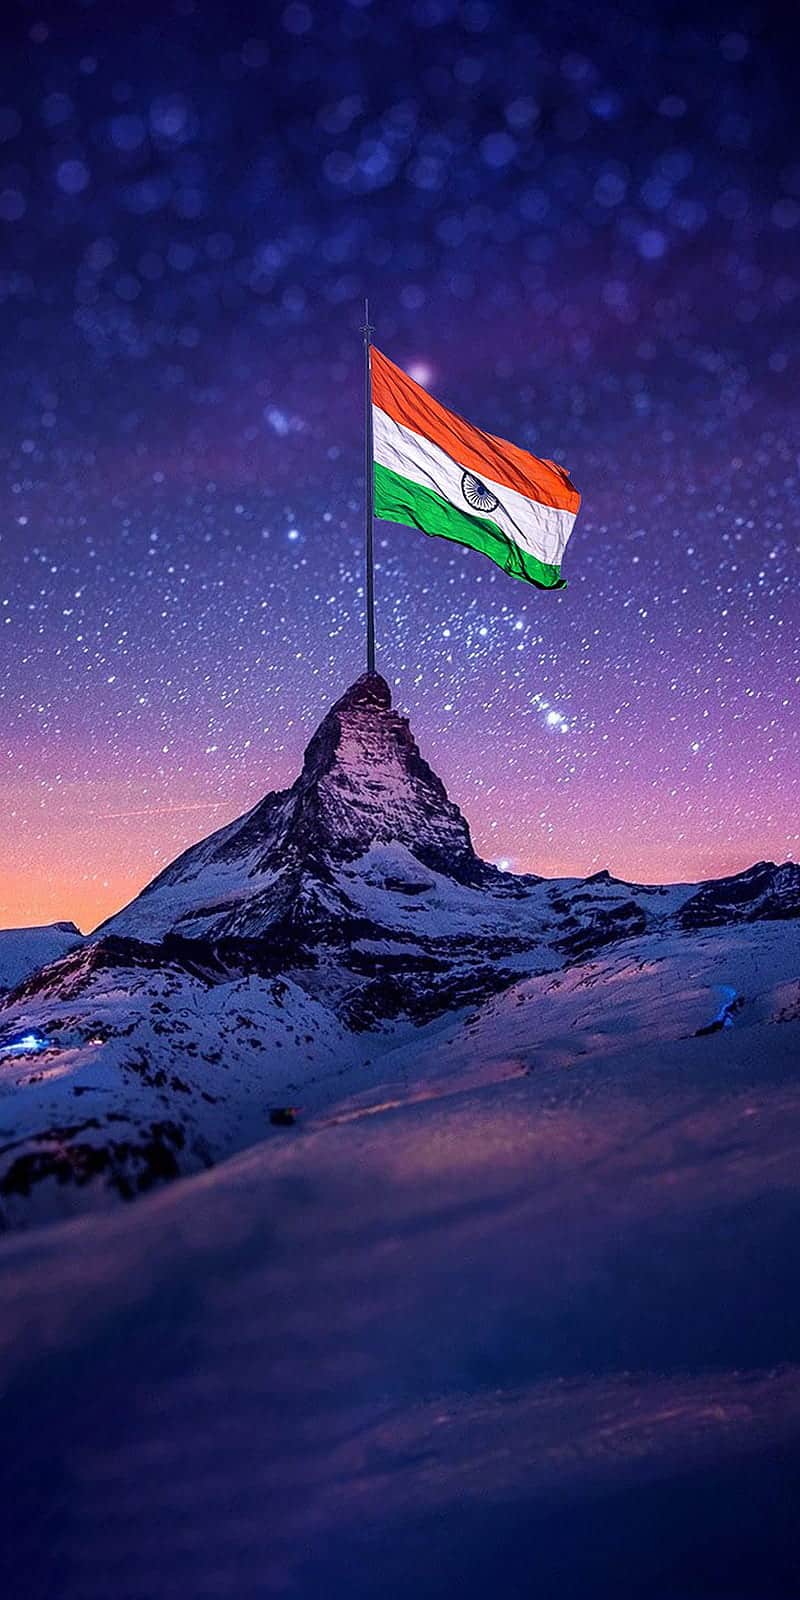 Indian Flag Image